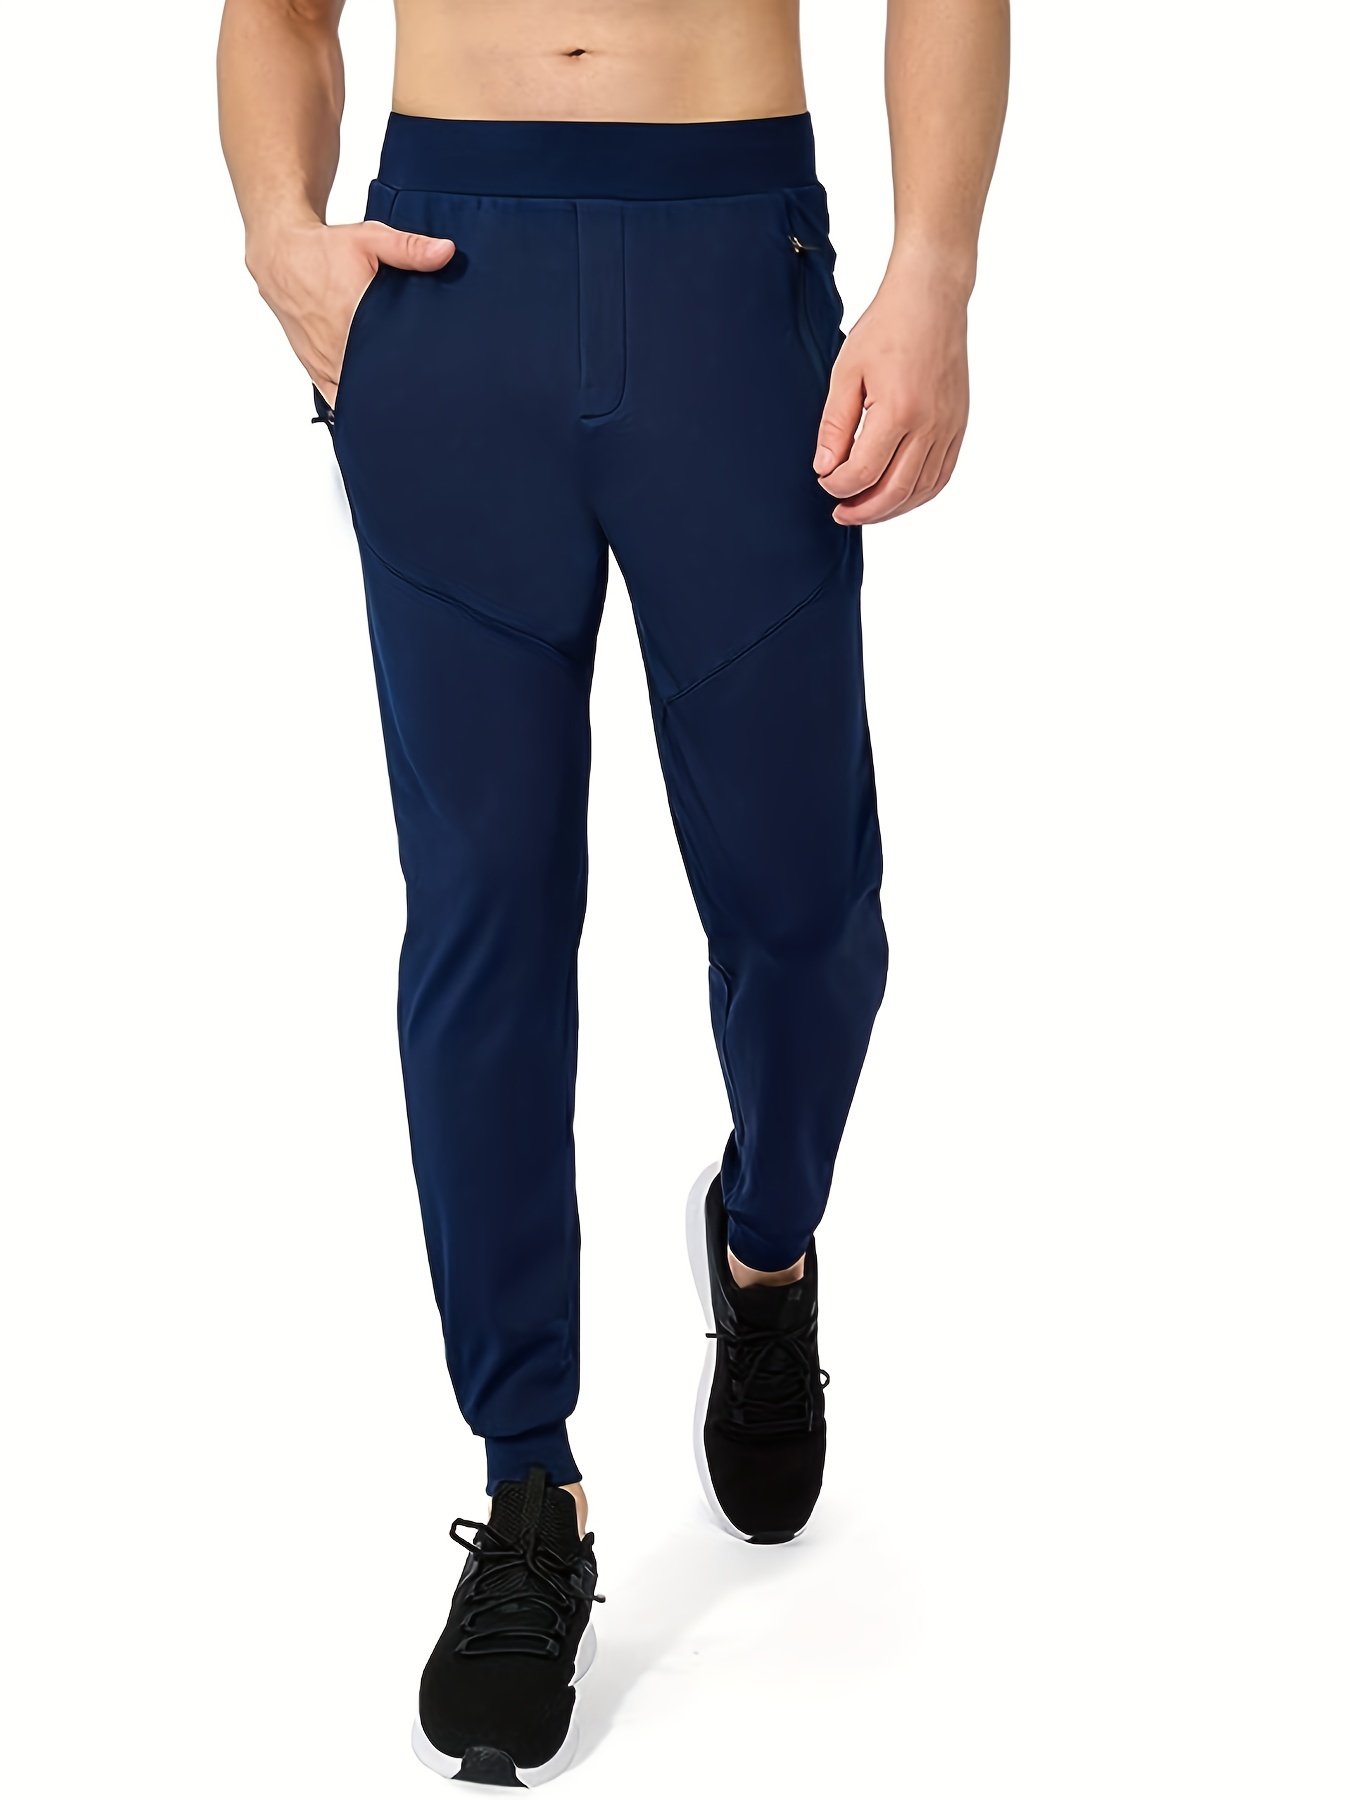 Men's Solid Color Waterproof Zipper Pocket Sweatpants Hiking